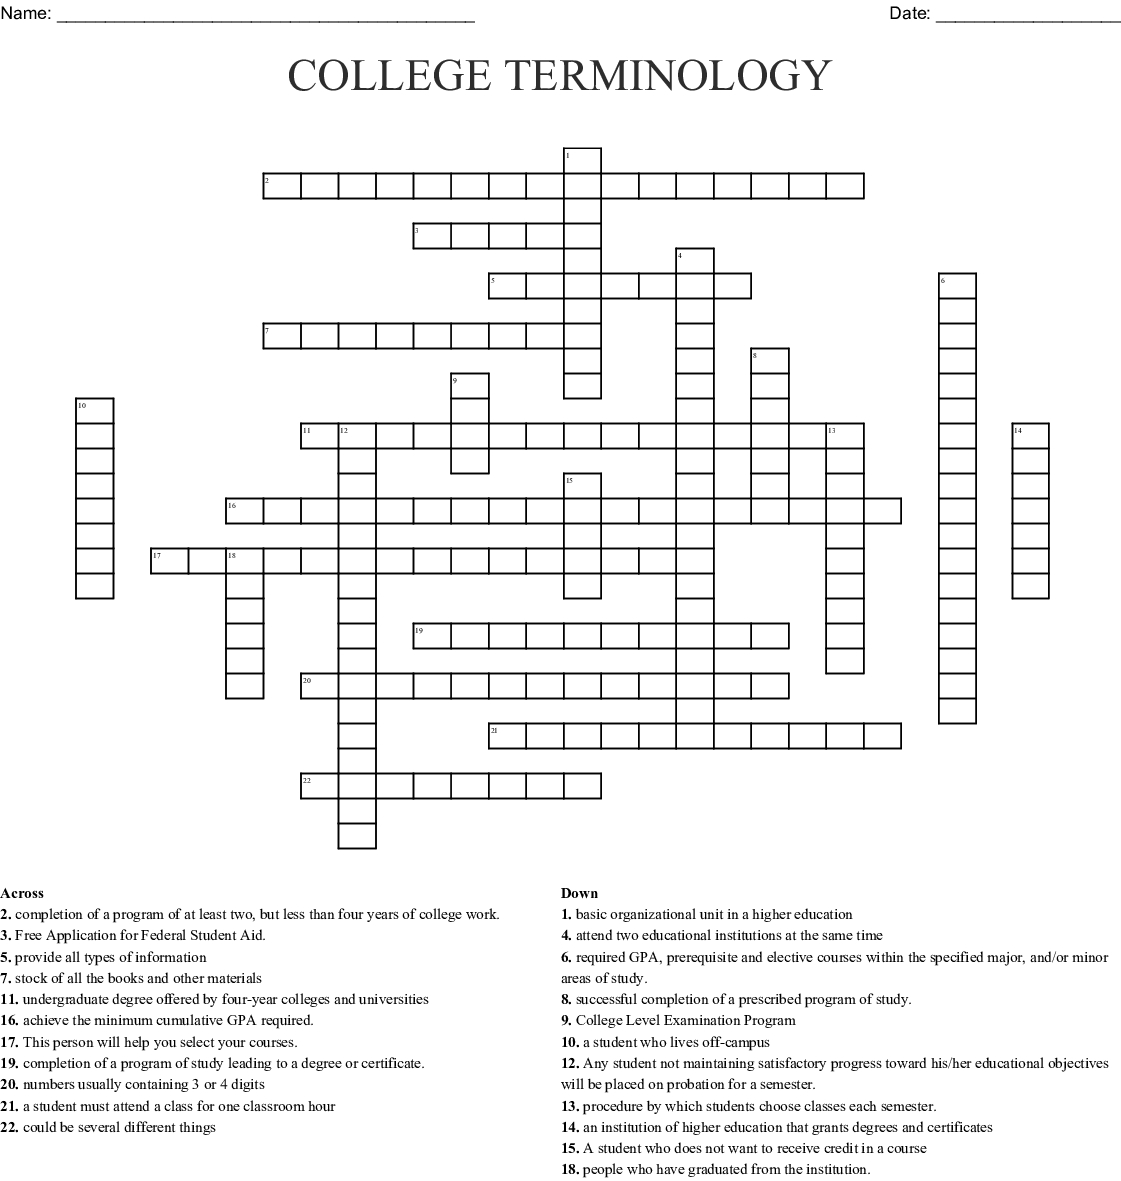 College Terminology Crossword - Wordmint - College Crossword Puzzle Printable